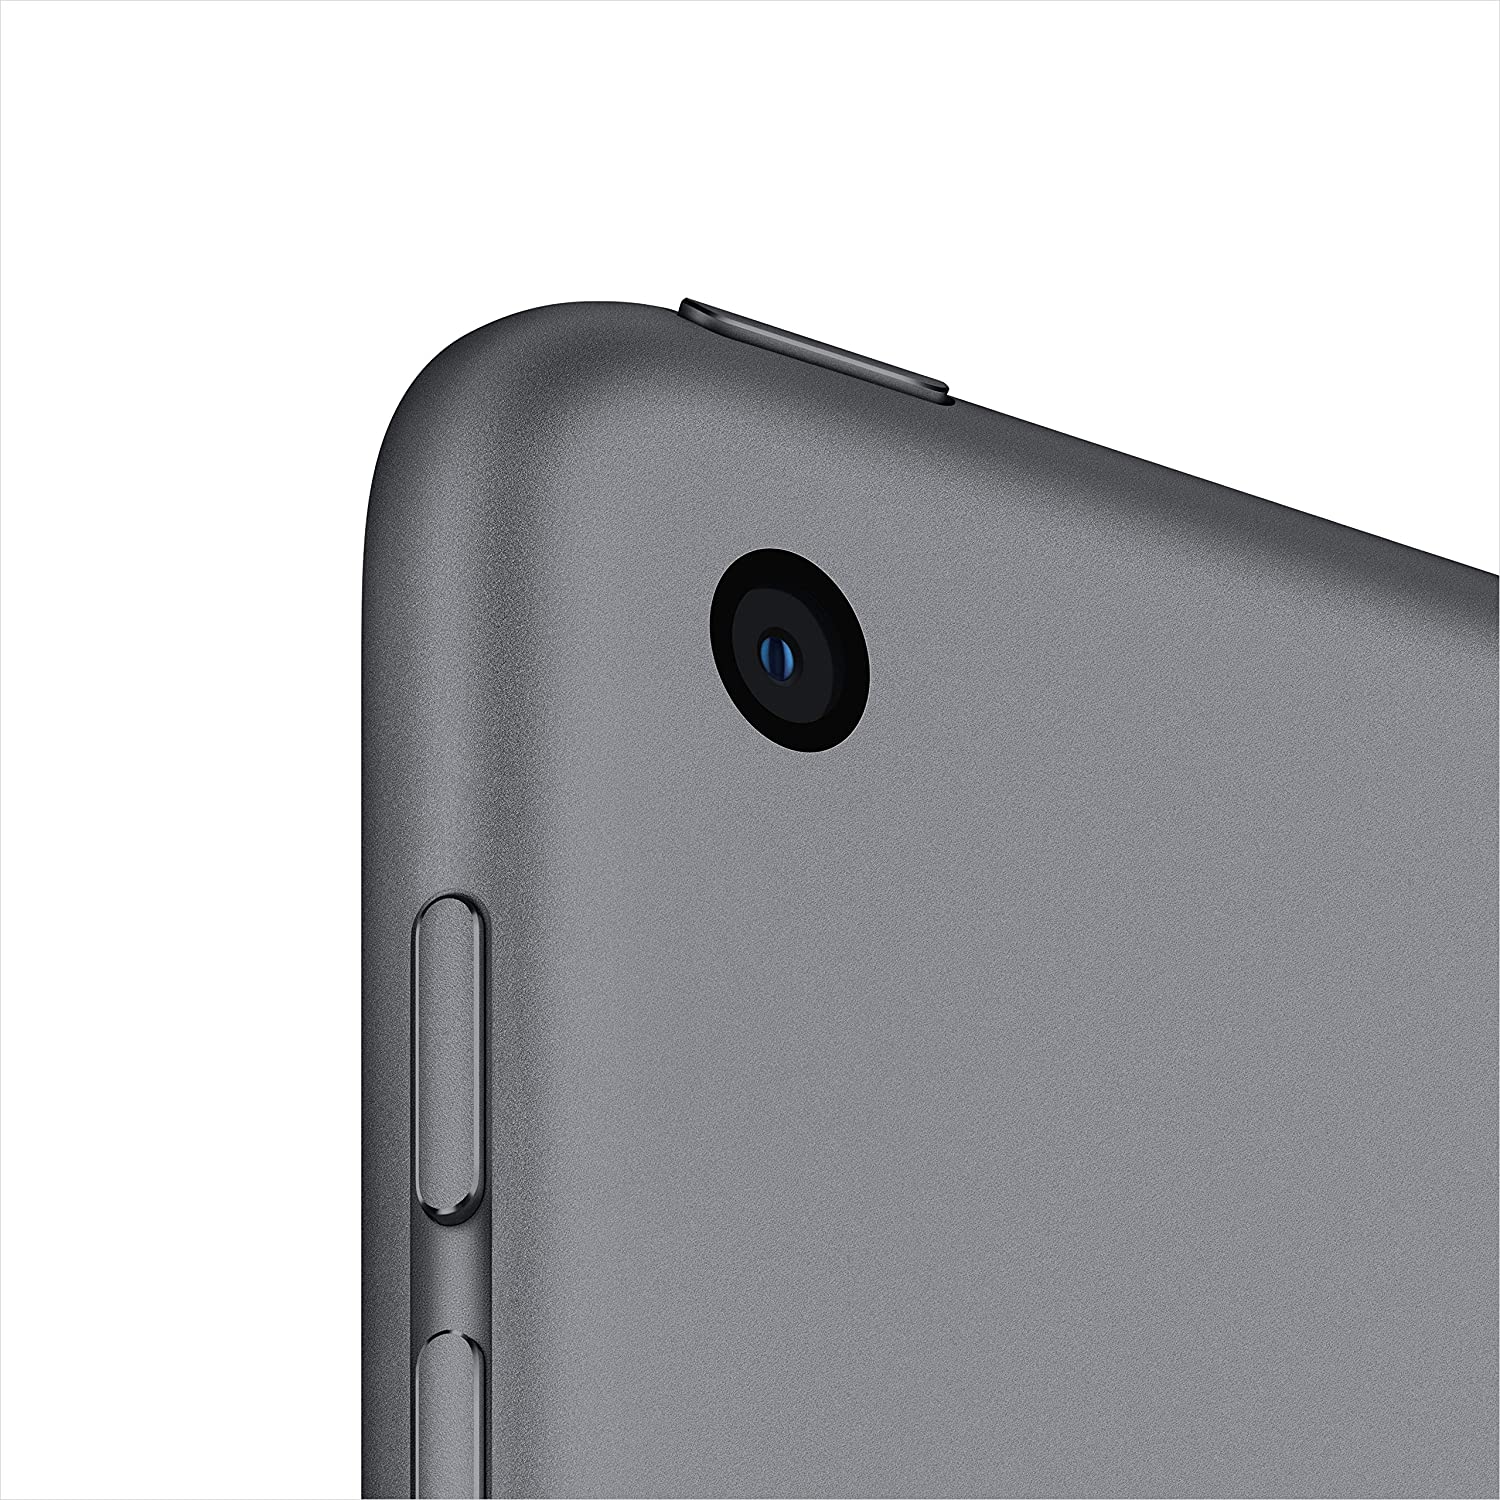 Apple 10.2-inch iPad Wi-Fi 32GB - Space Gray (Fall 2020) 8th Gen - Camera View